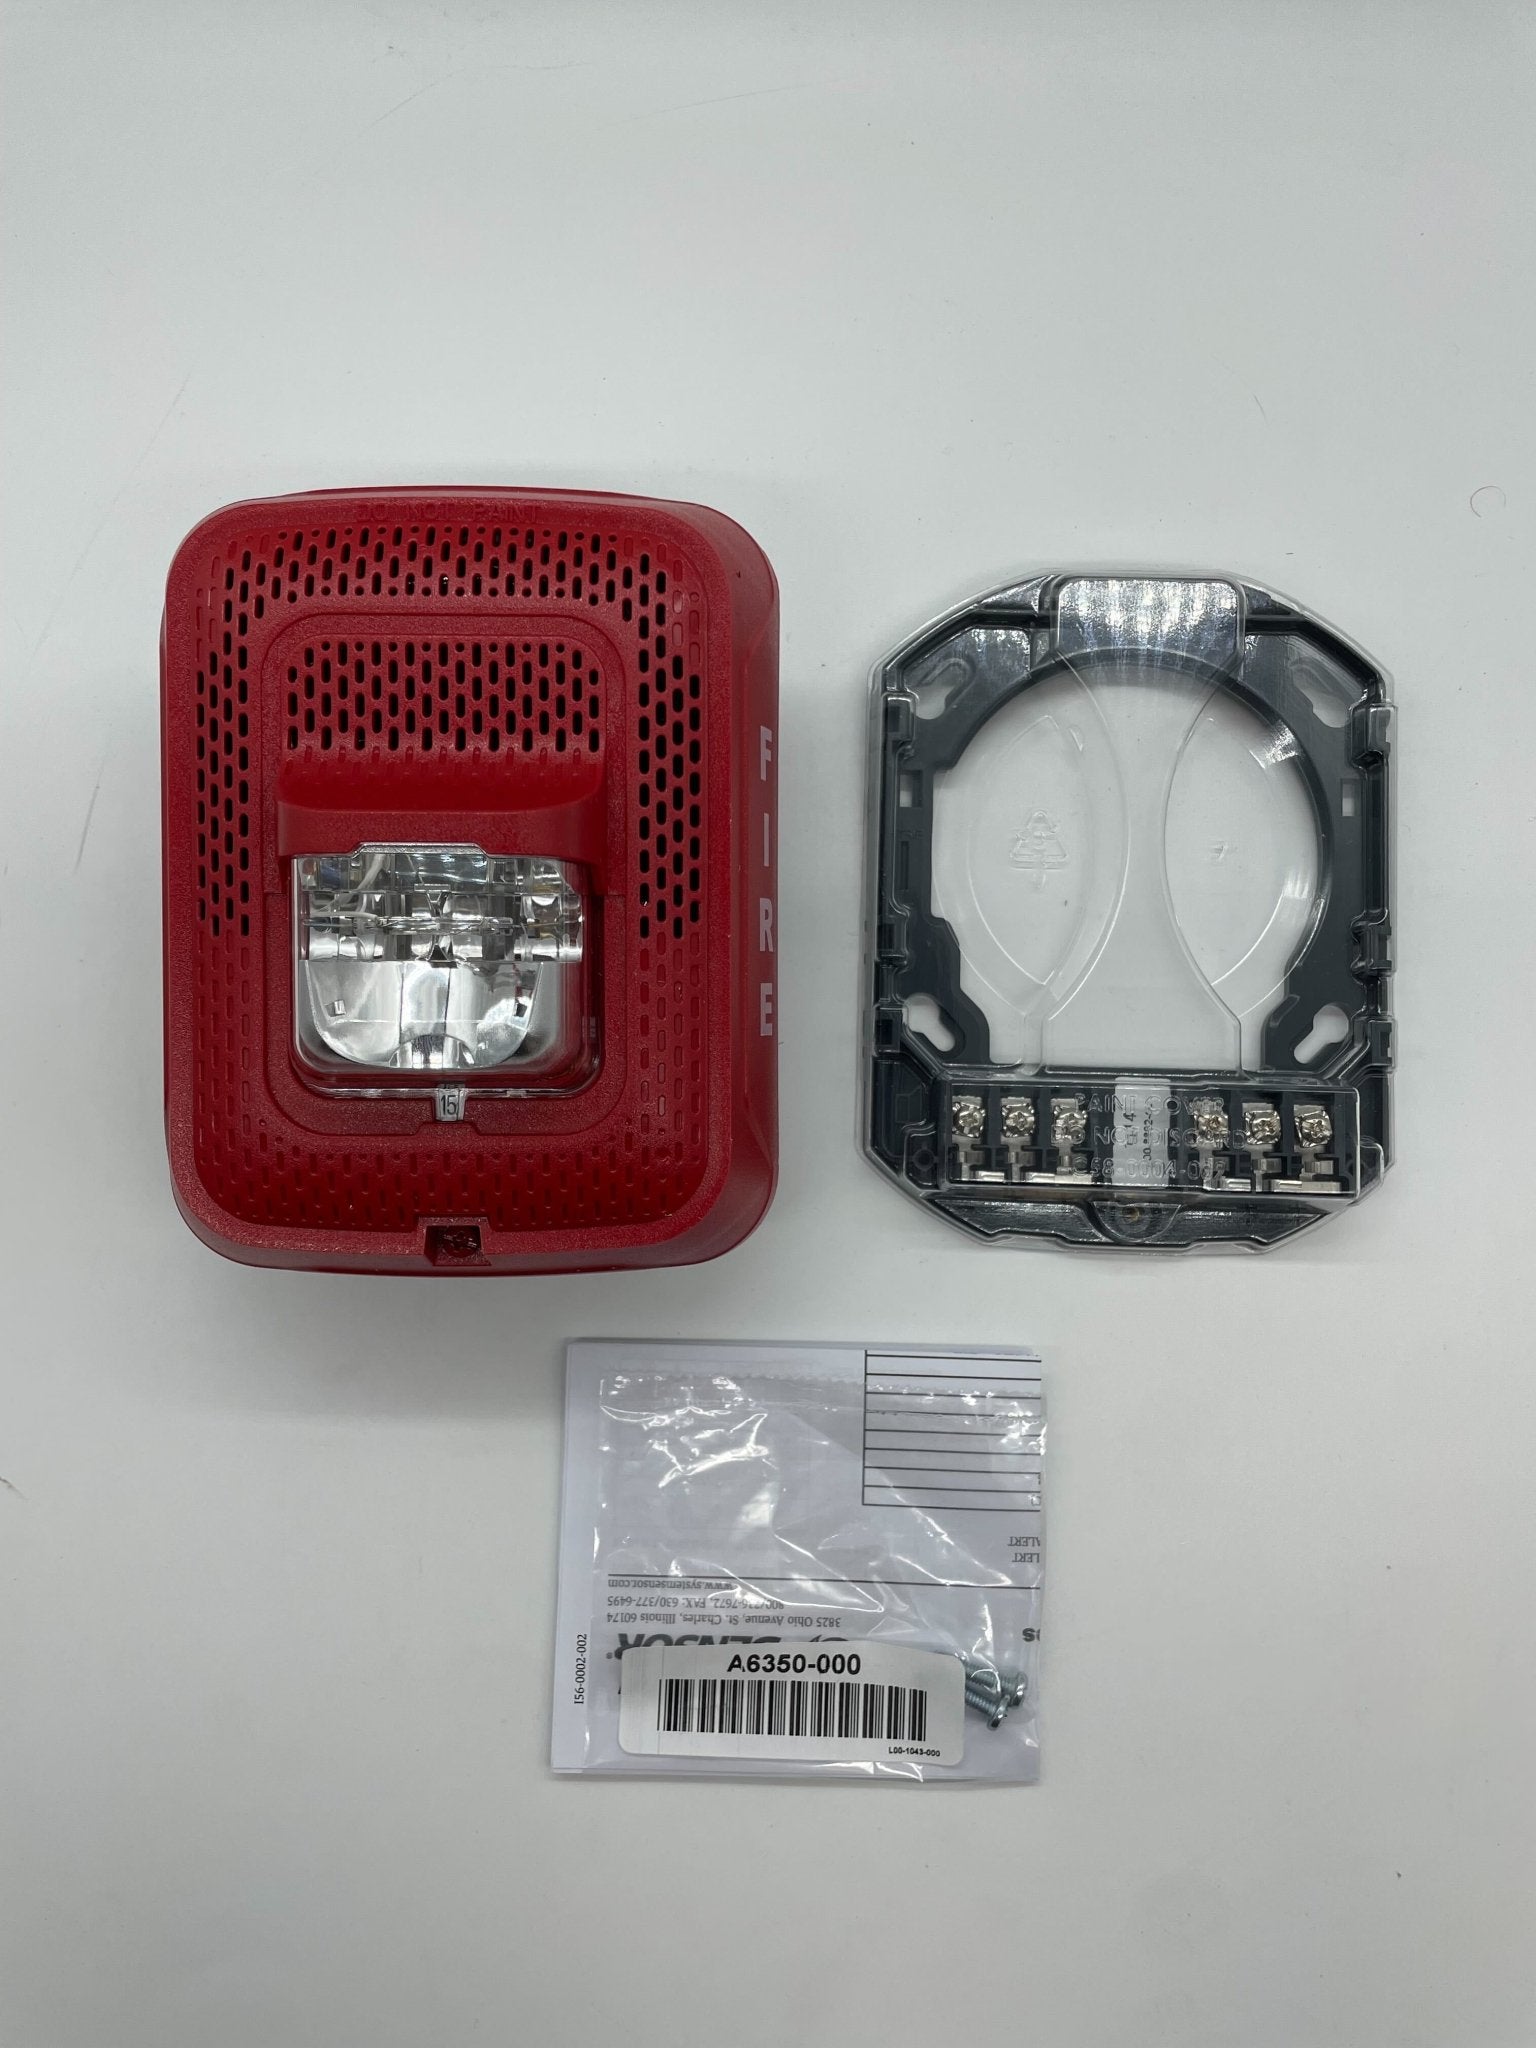 System Sensor SPSRL - The Fire Alarm Supplier